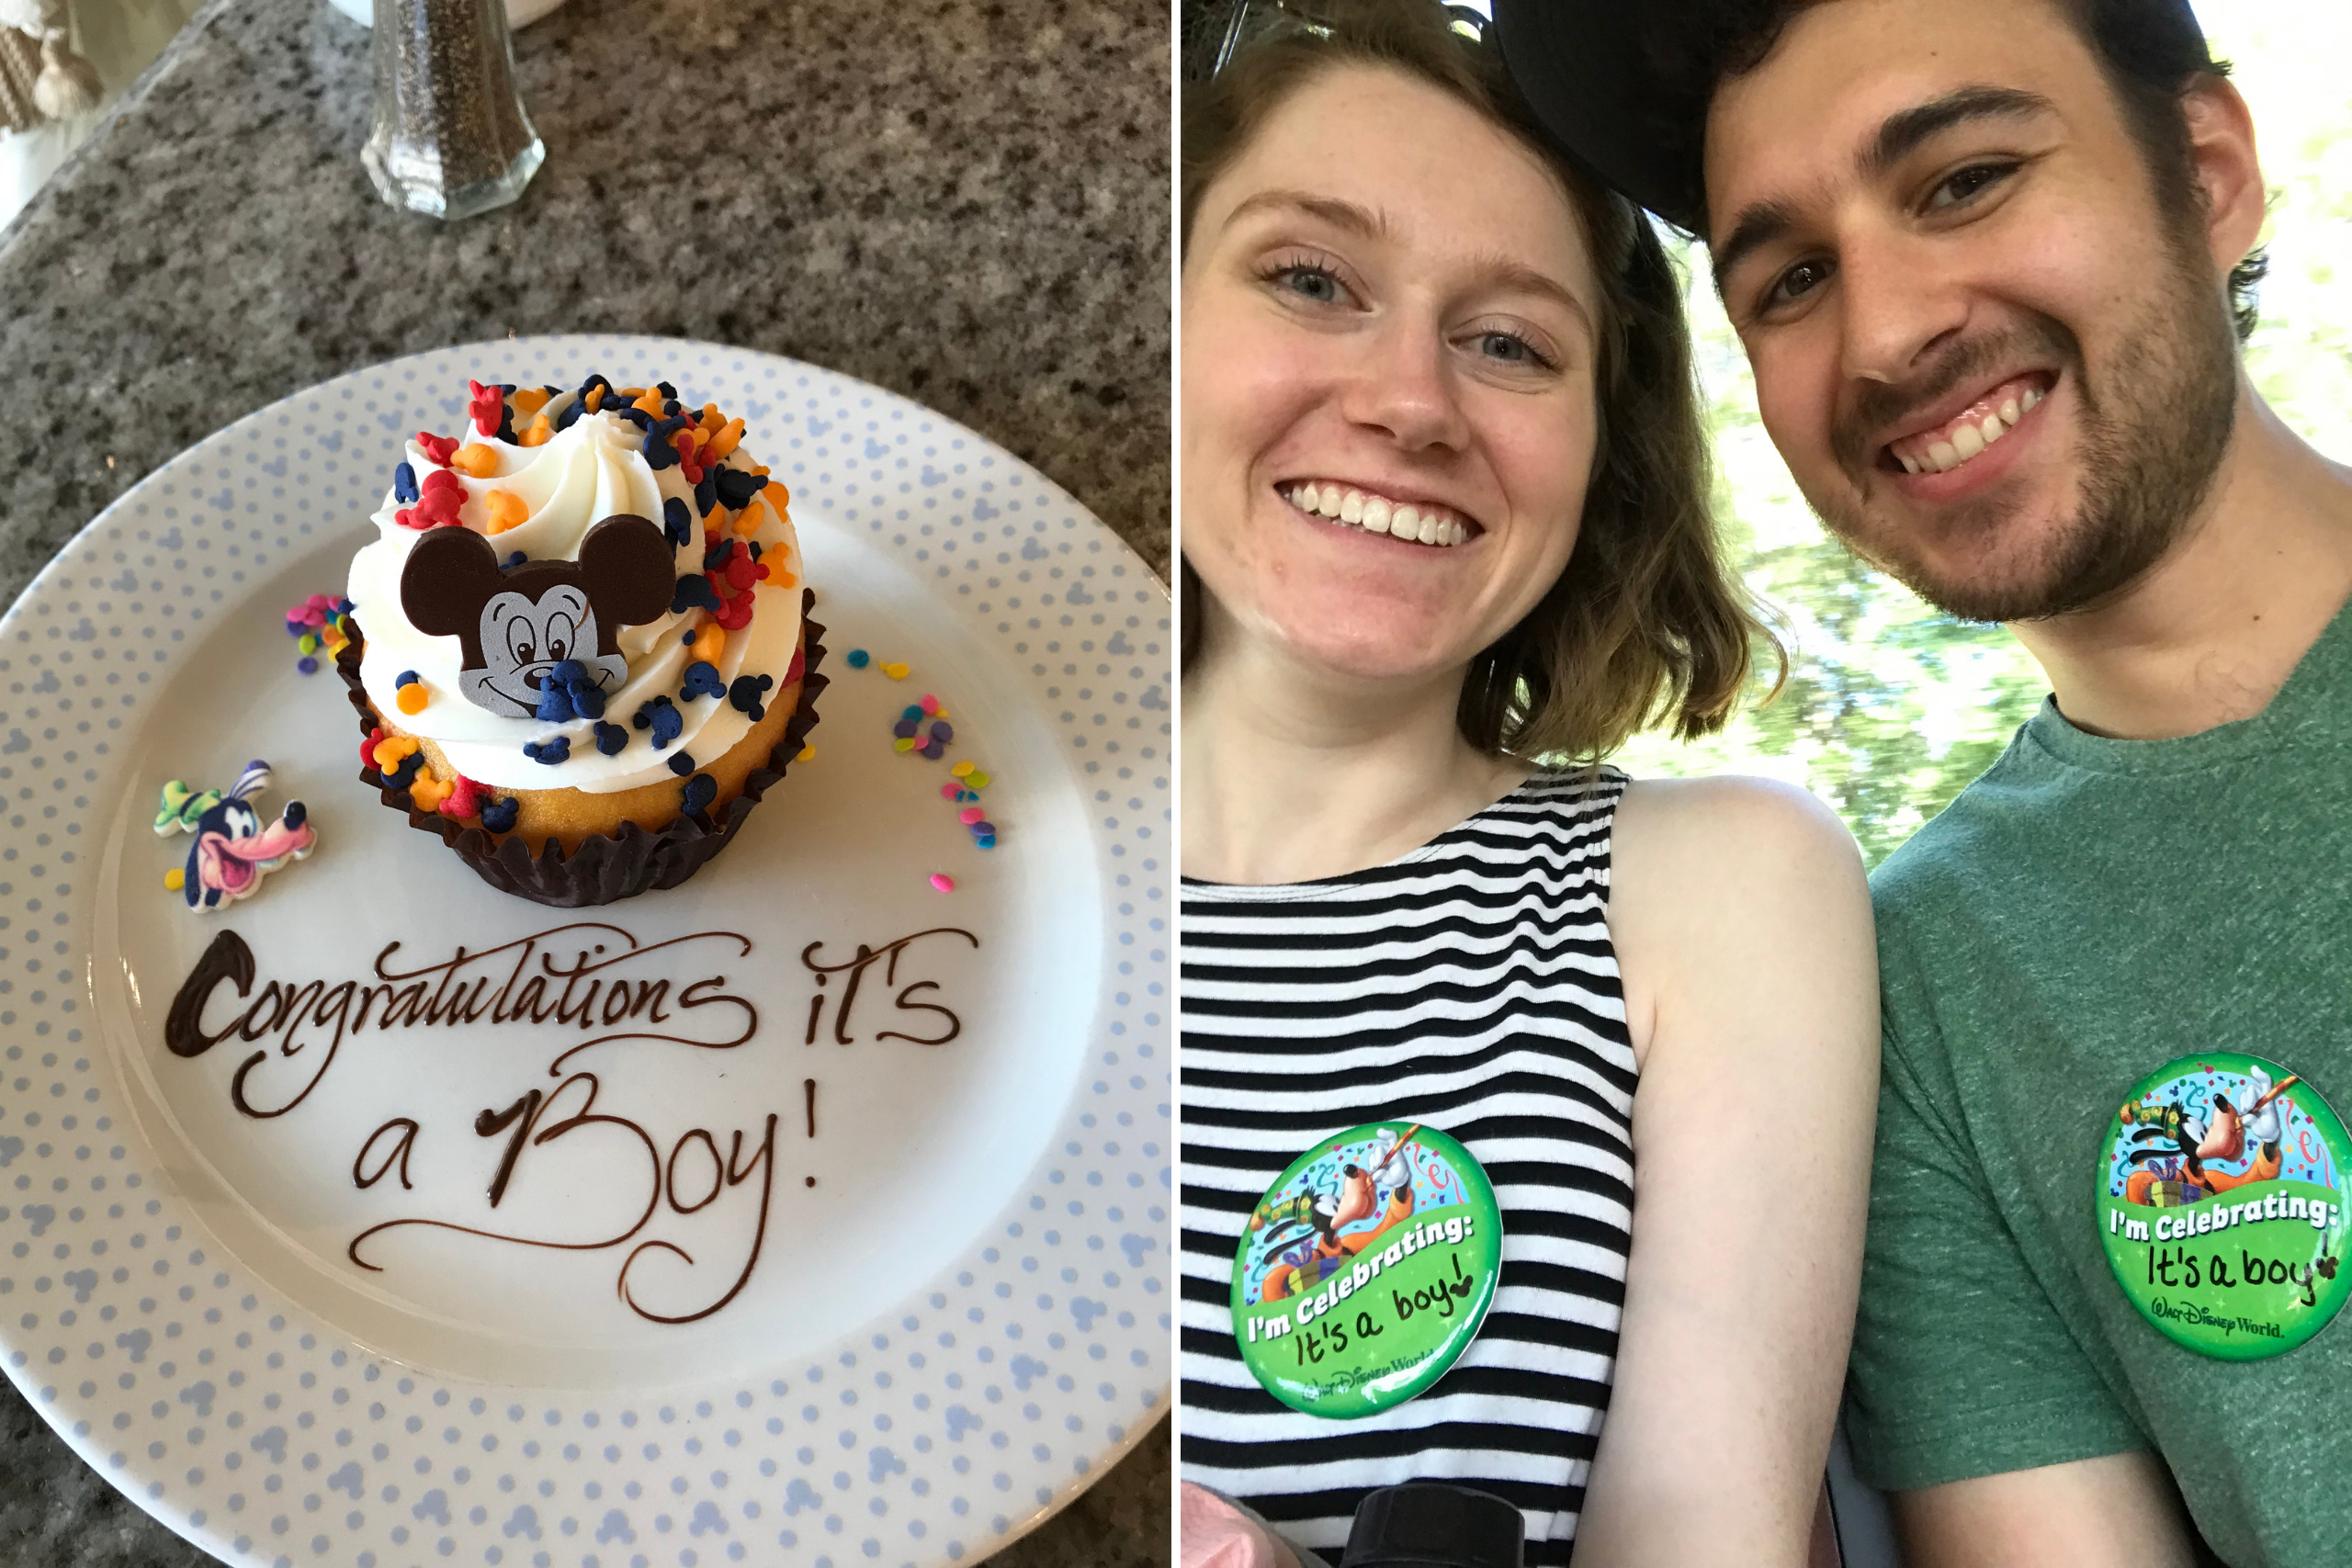 Celebrating "It's a boy!" at our Disney World babymoon